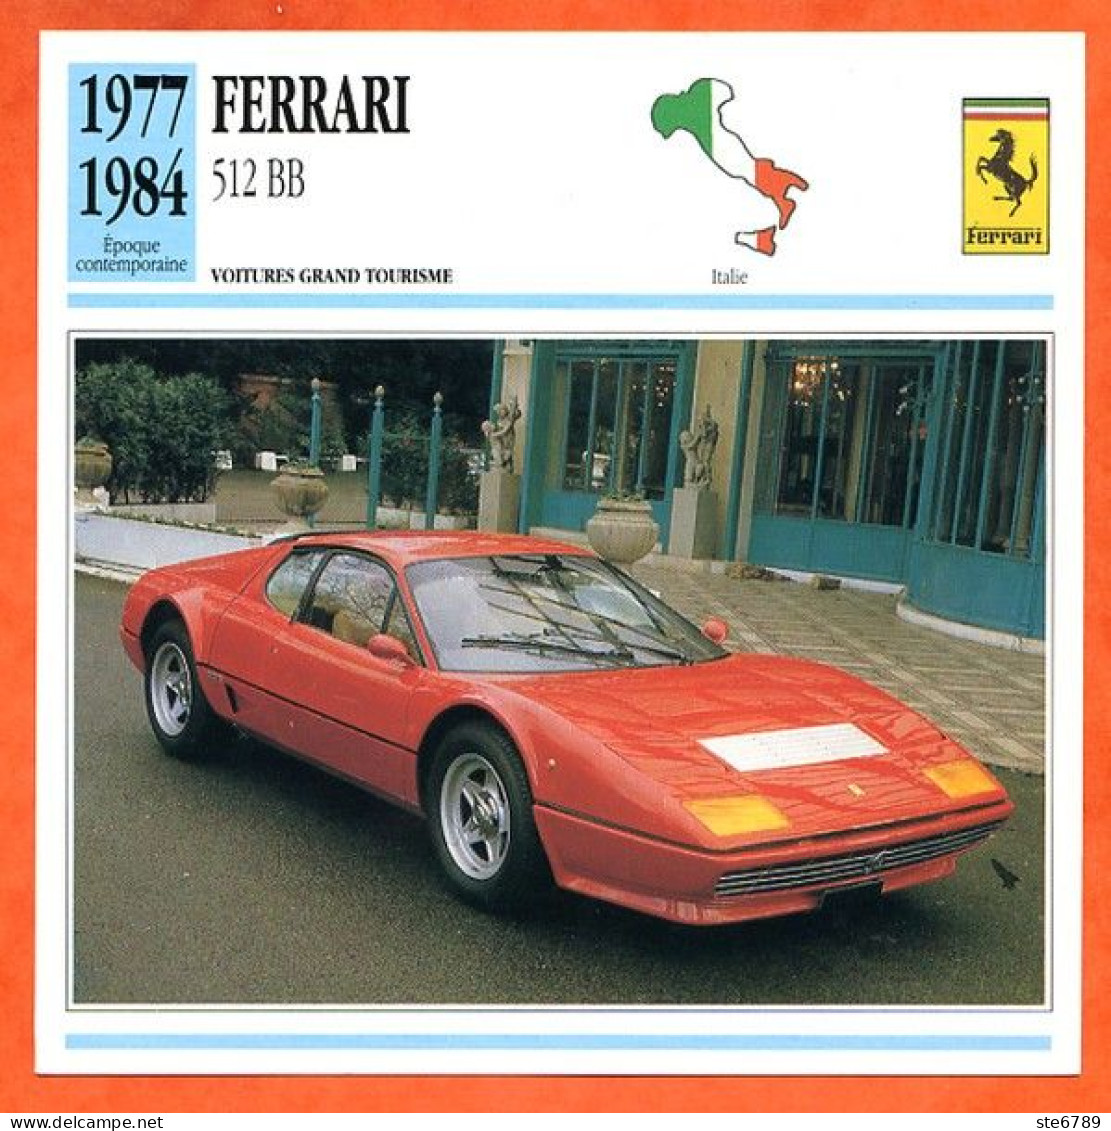 FERRARI 512 BB 1977 Voiture Grand Tourisme Italie Fiche Technique Automobile - Cars